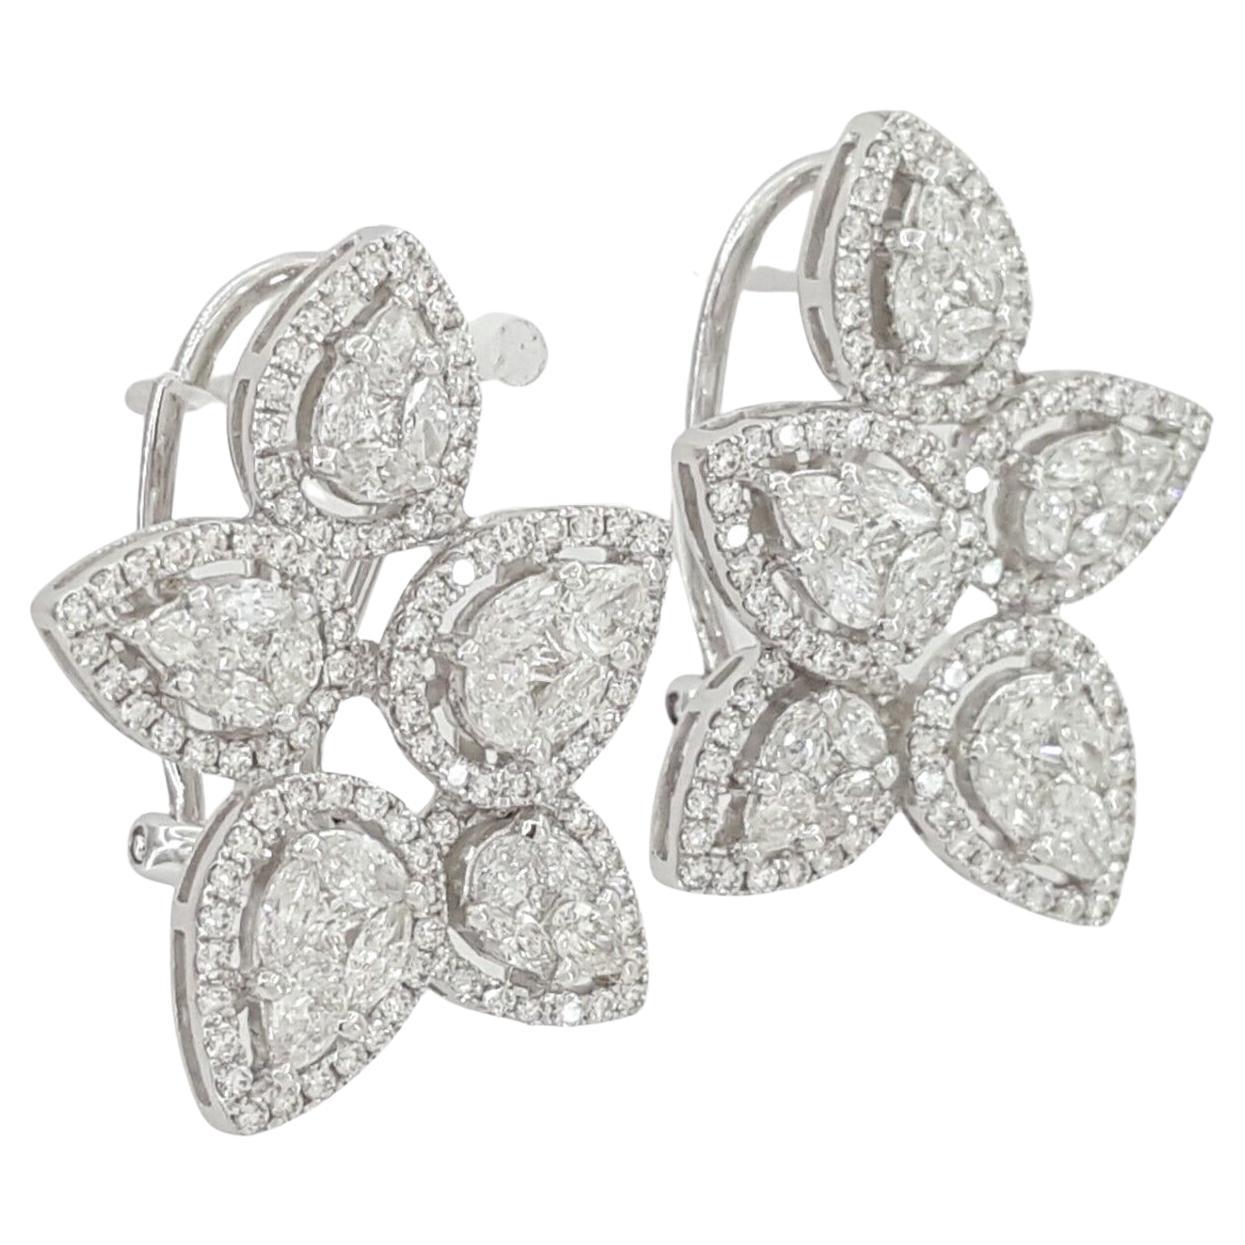 2.5 ct Round, Pear, Marquise, & Princess Brilliant Cut Diamond Flower Shape Cluster Halo 18k White Gold Clip-On Earrings.
E/F color
vs1/vs2 clarity